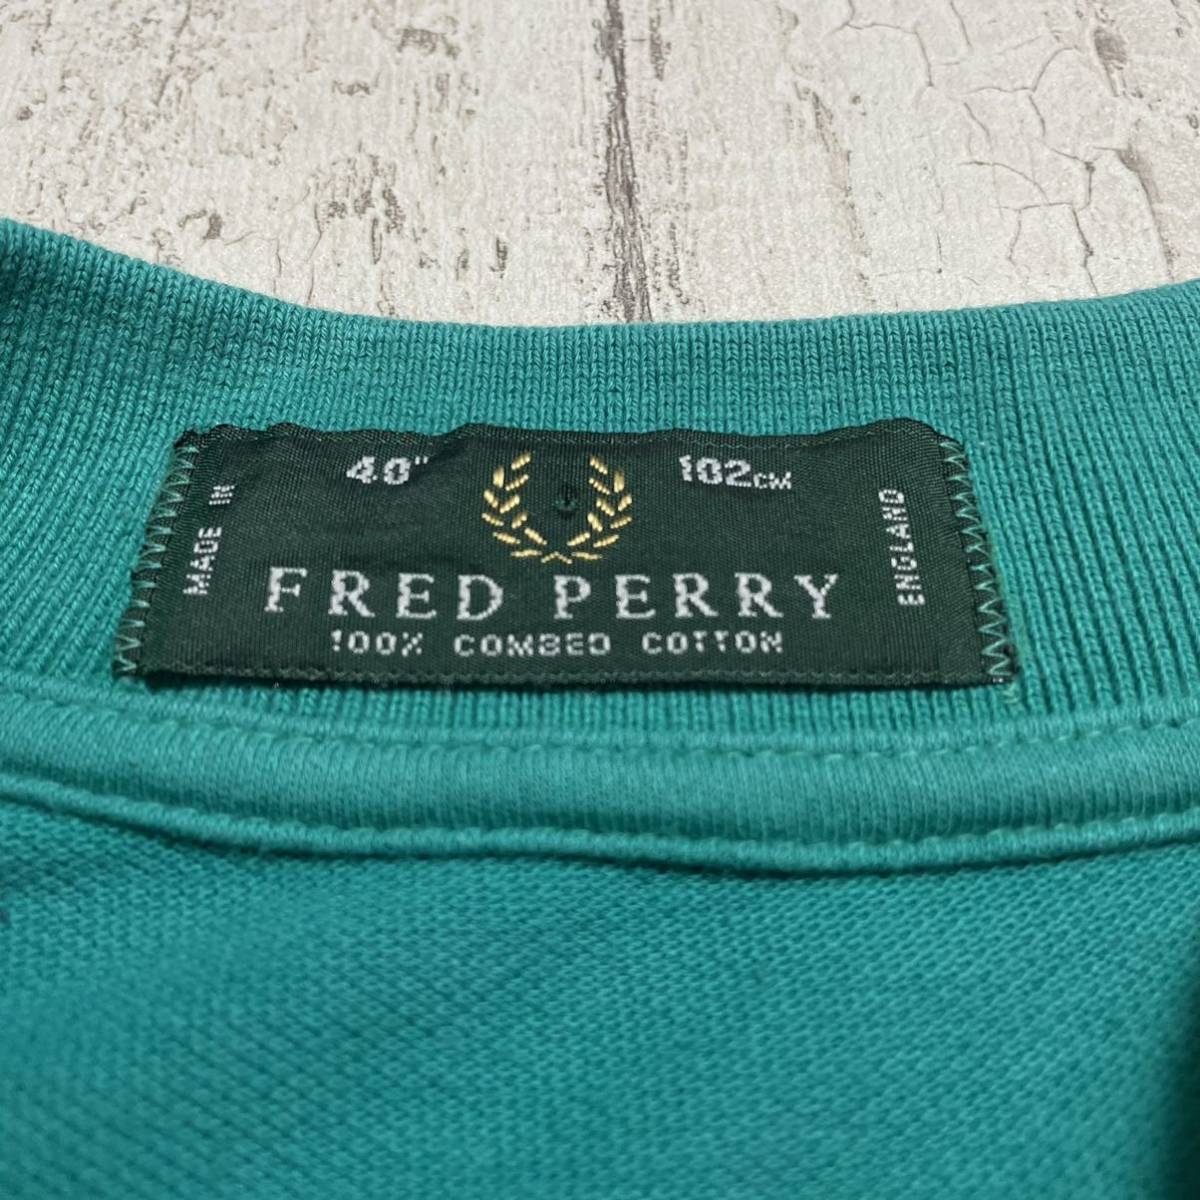 [ трудно найти ] Fred Perry FRED PERRY рубашка-поло с коротким рукавом 40 бирюзовый зеленый 90s вышивка Logo 